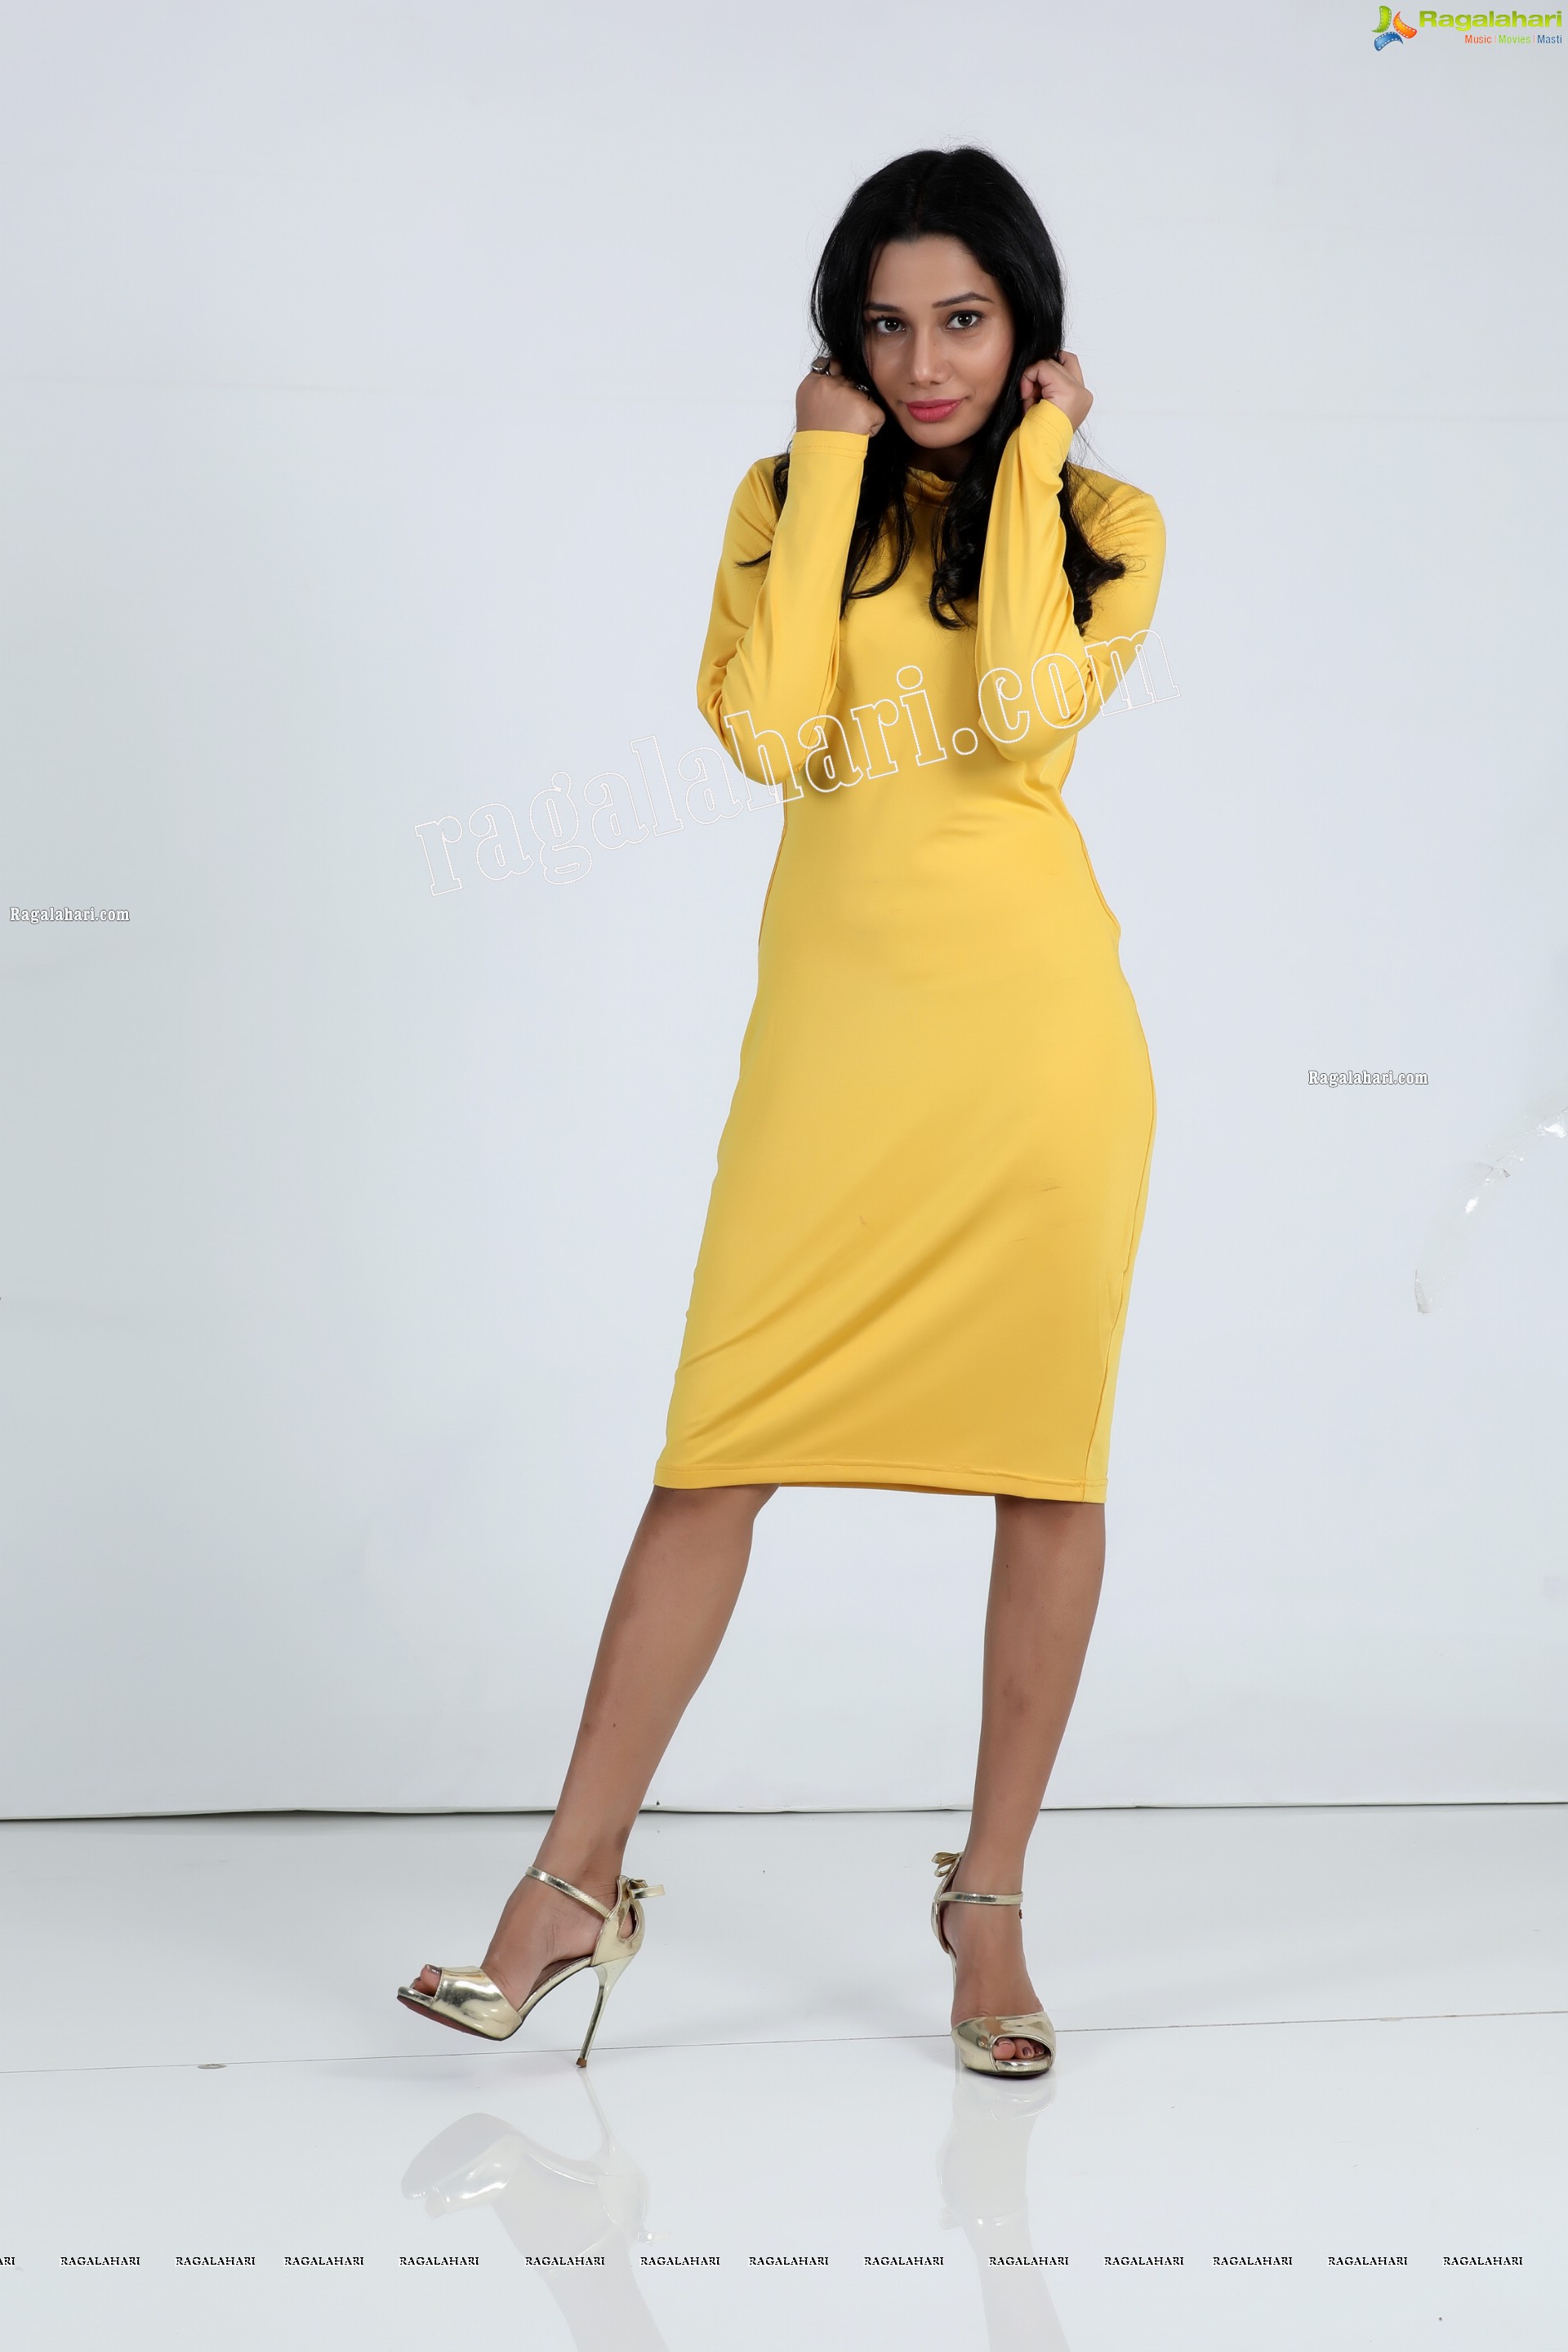 Tueeshaa in Yellow High Neck Jumper Dress Exclusive Photo Shoot